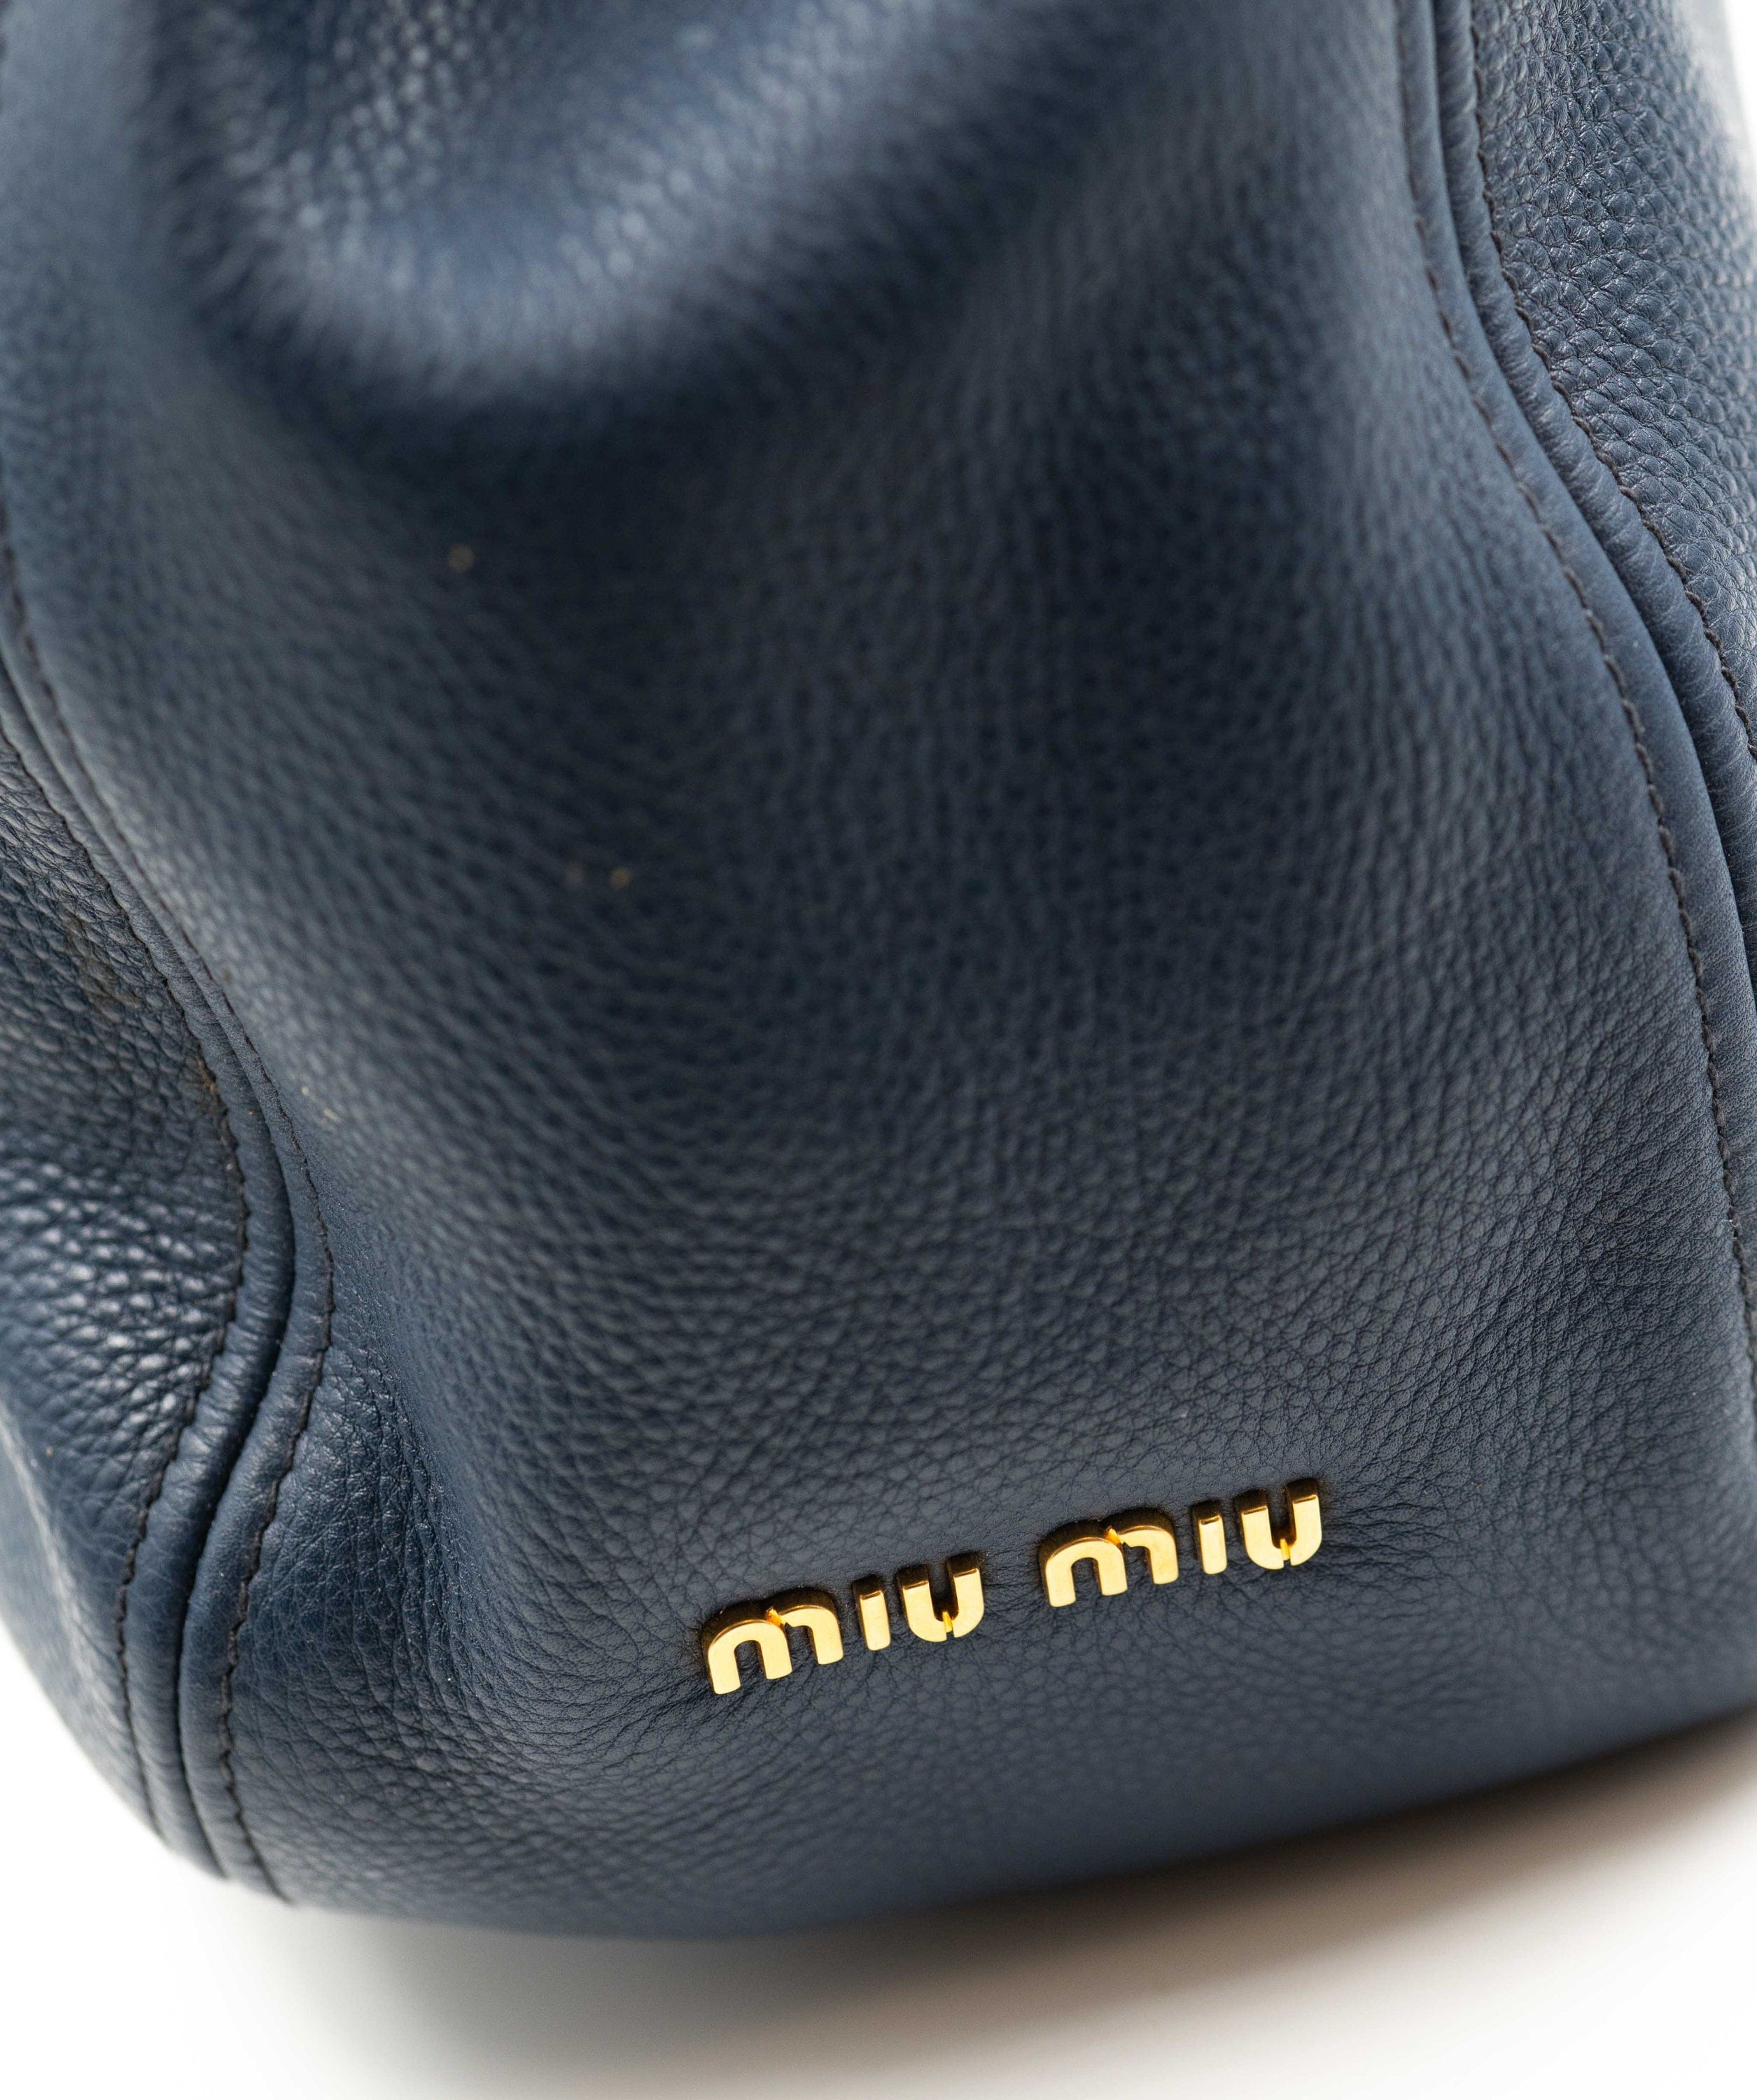 Miumiu Miu Miu navy tote bag - AJC0036